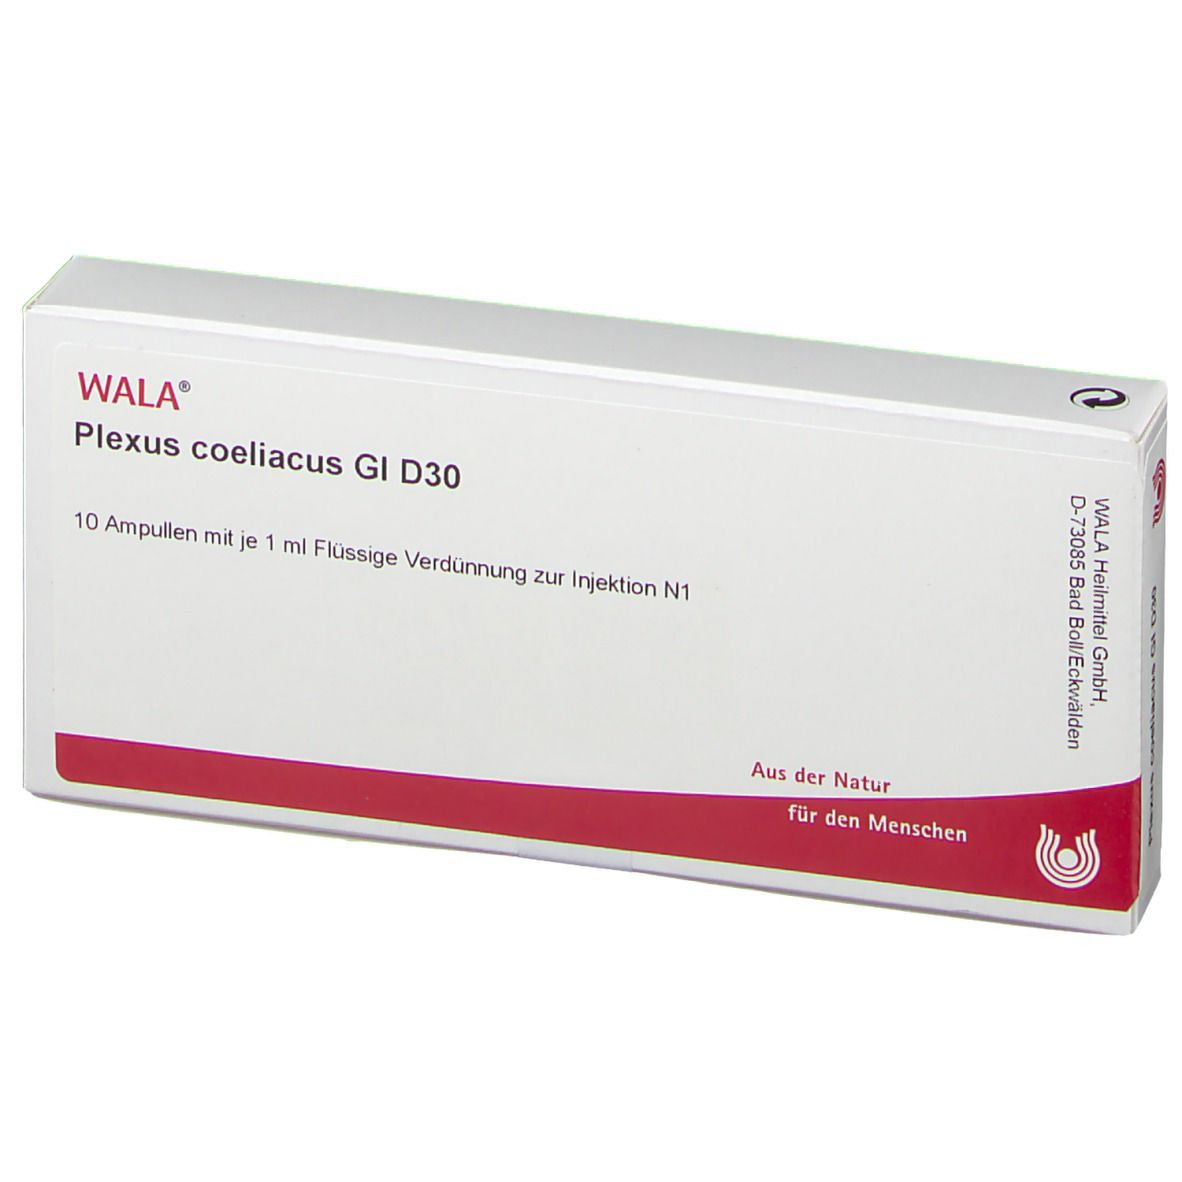 WALA® Plexus coeliacus Gl D 30